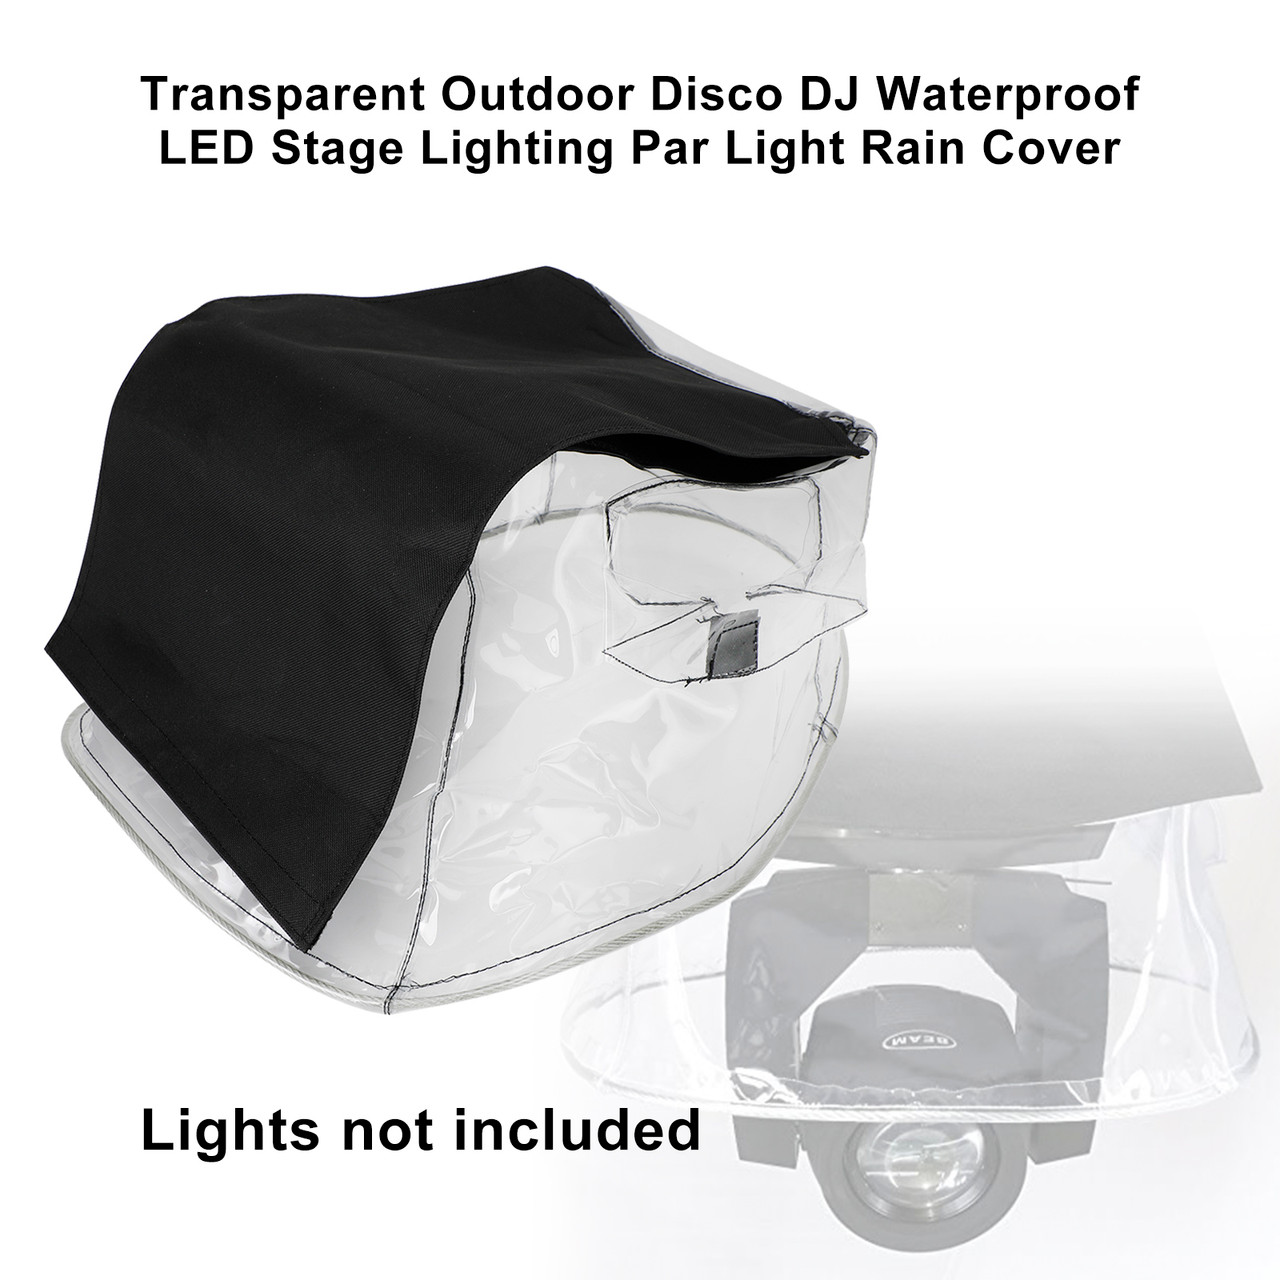 Transparent Outdoor Disco DJ Waterproof LED Stage Lighting Par Light Rain Cover